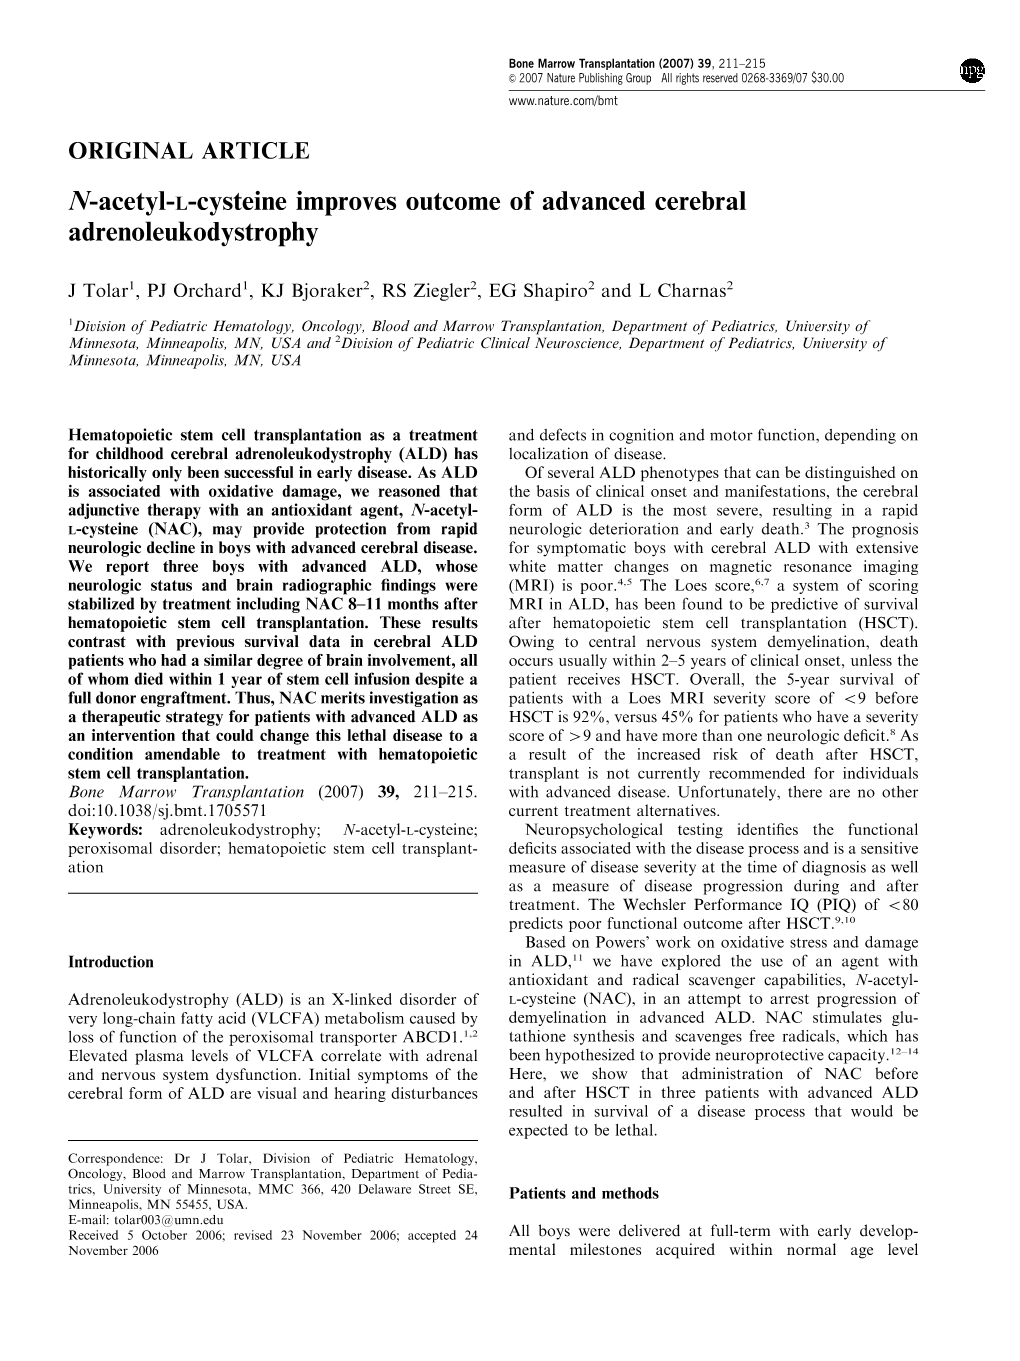 N-Acetyl-L-Cysteine Improves Outcome of Advanced Cerebral Adrenoleukodystrophy